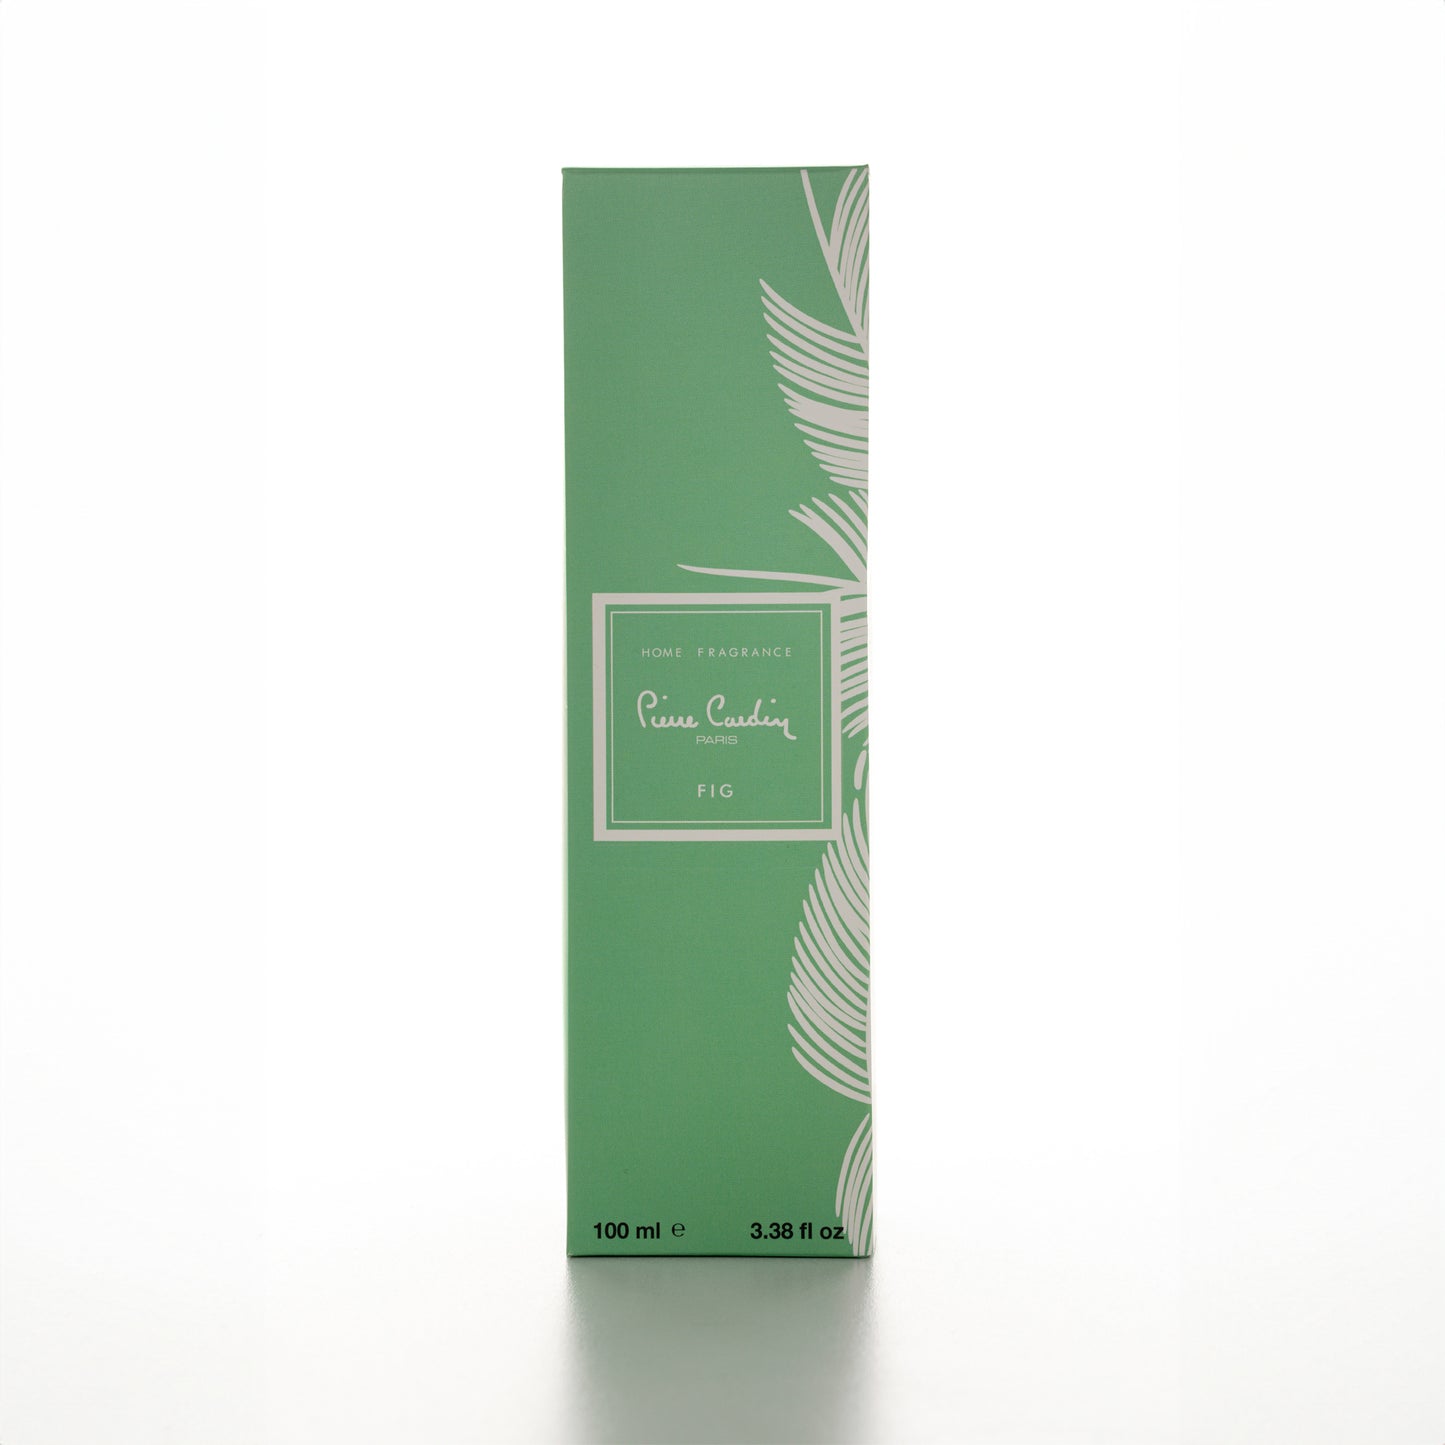 Parfum d'Ambiance Pierre Cardin - FIGUE 100 ml